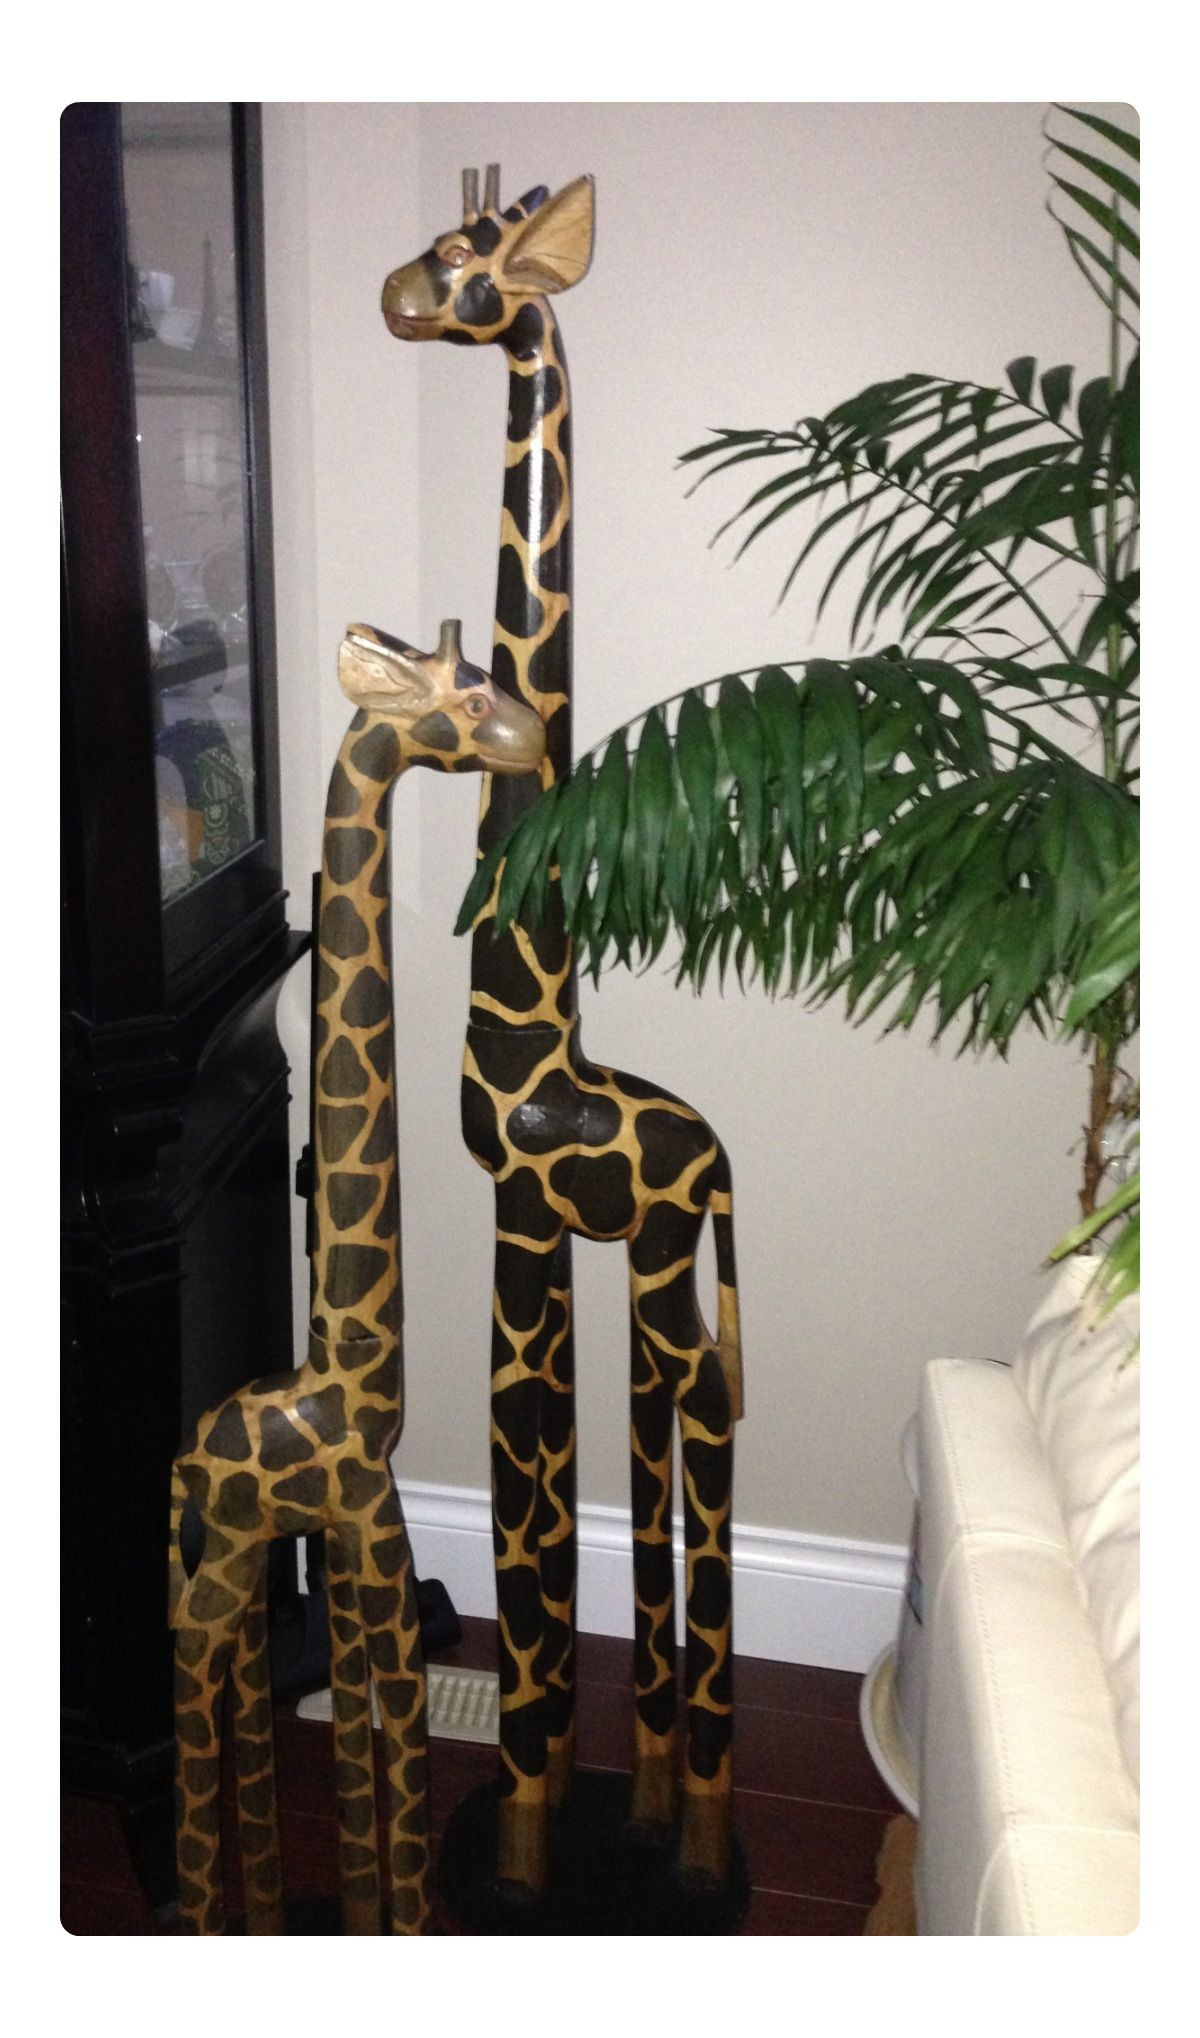 Giraffe Decor For Living Room
 These are giraffe decorations I got for my house